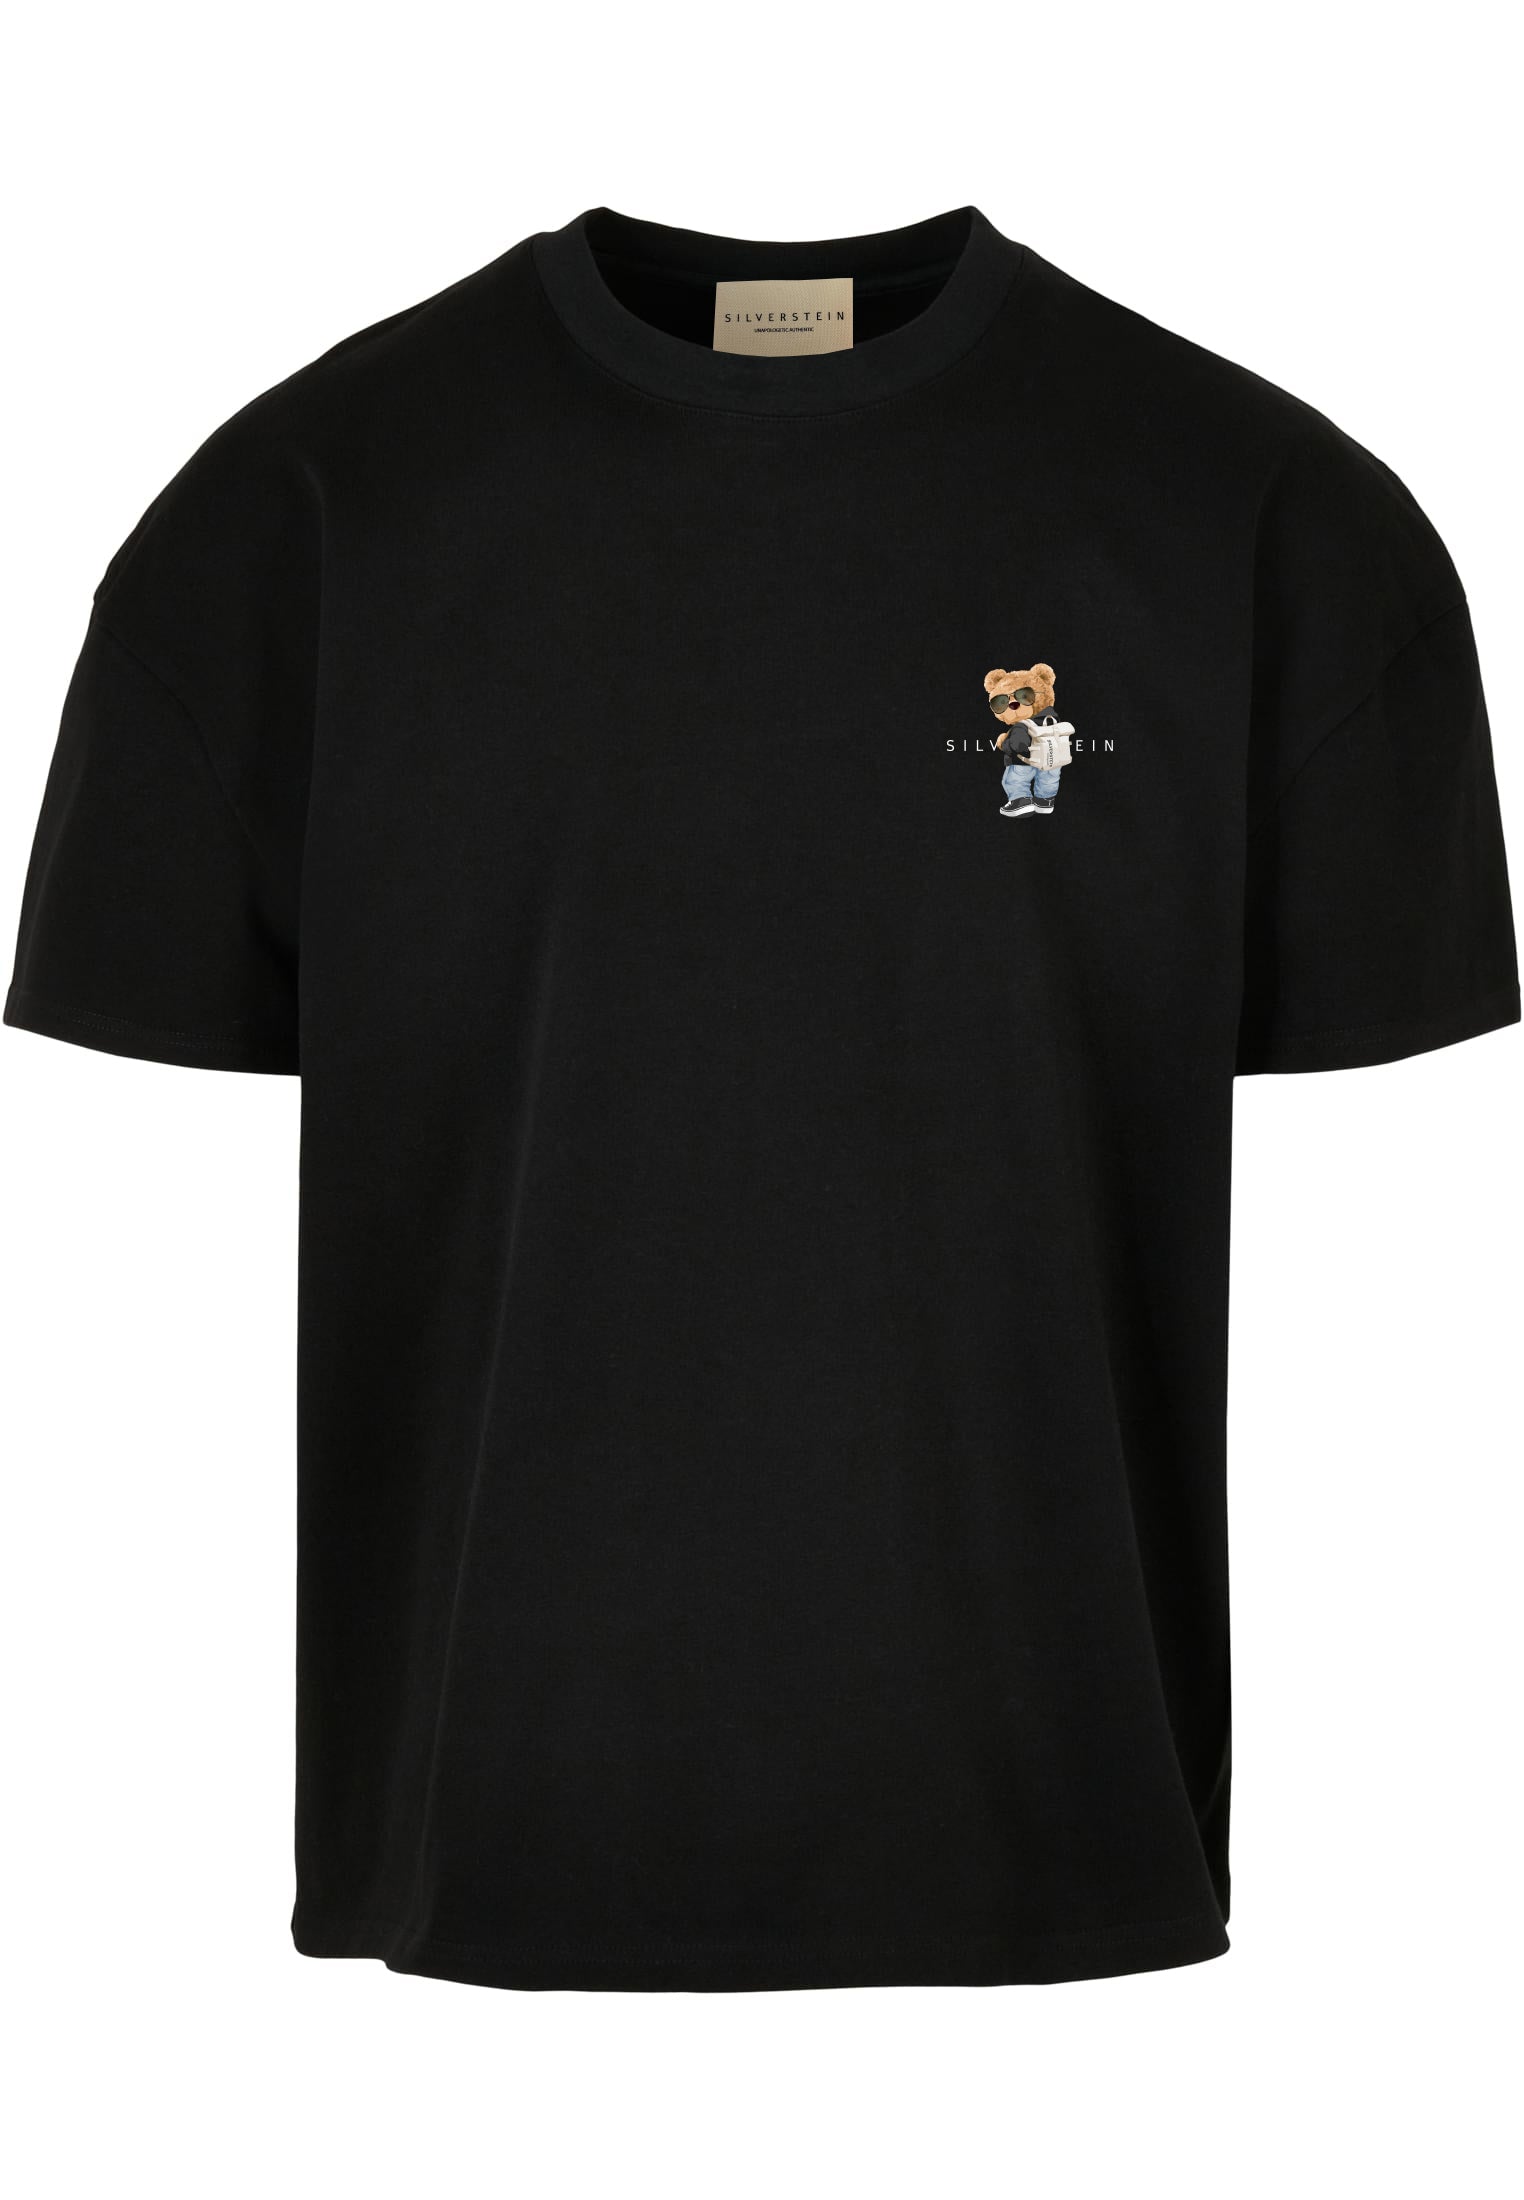 Black "Rockbag Teddy" Unisex T-Shirt